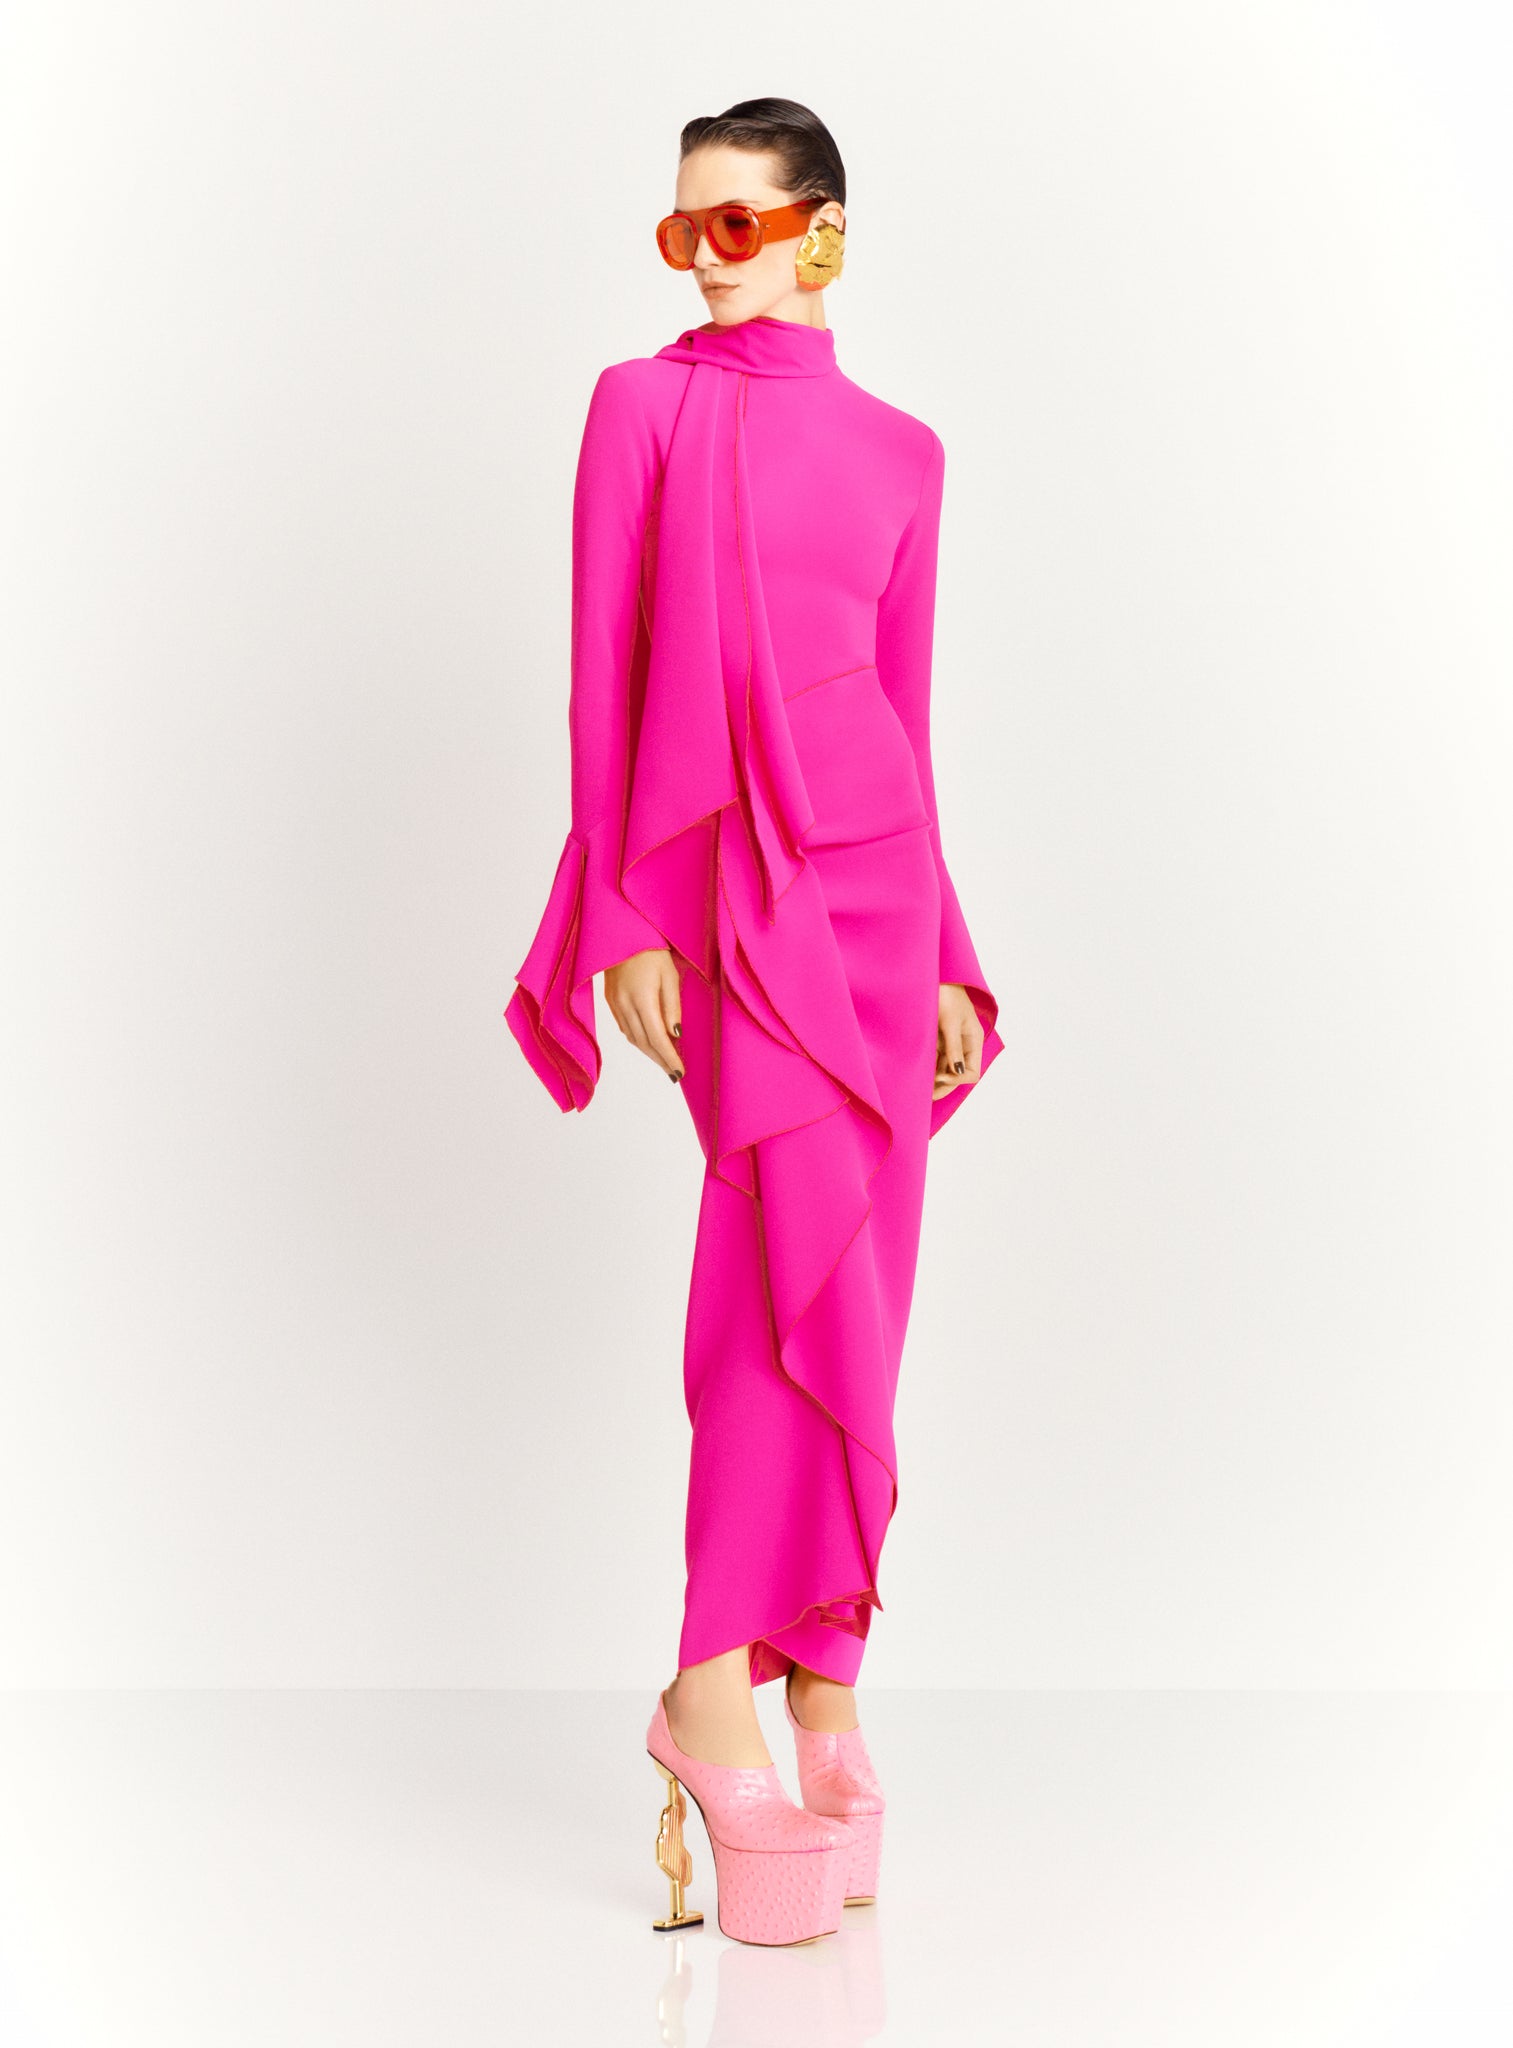 The Nella Maxi Dress in Pink